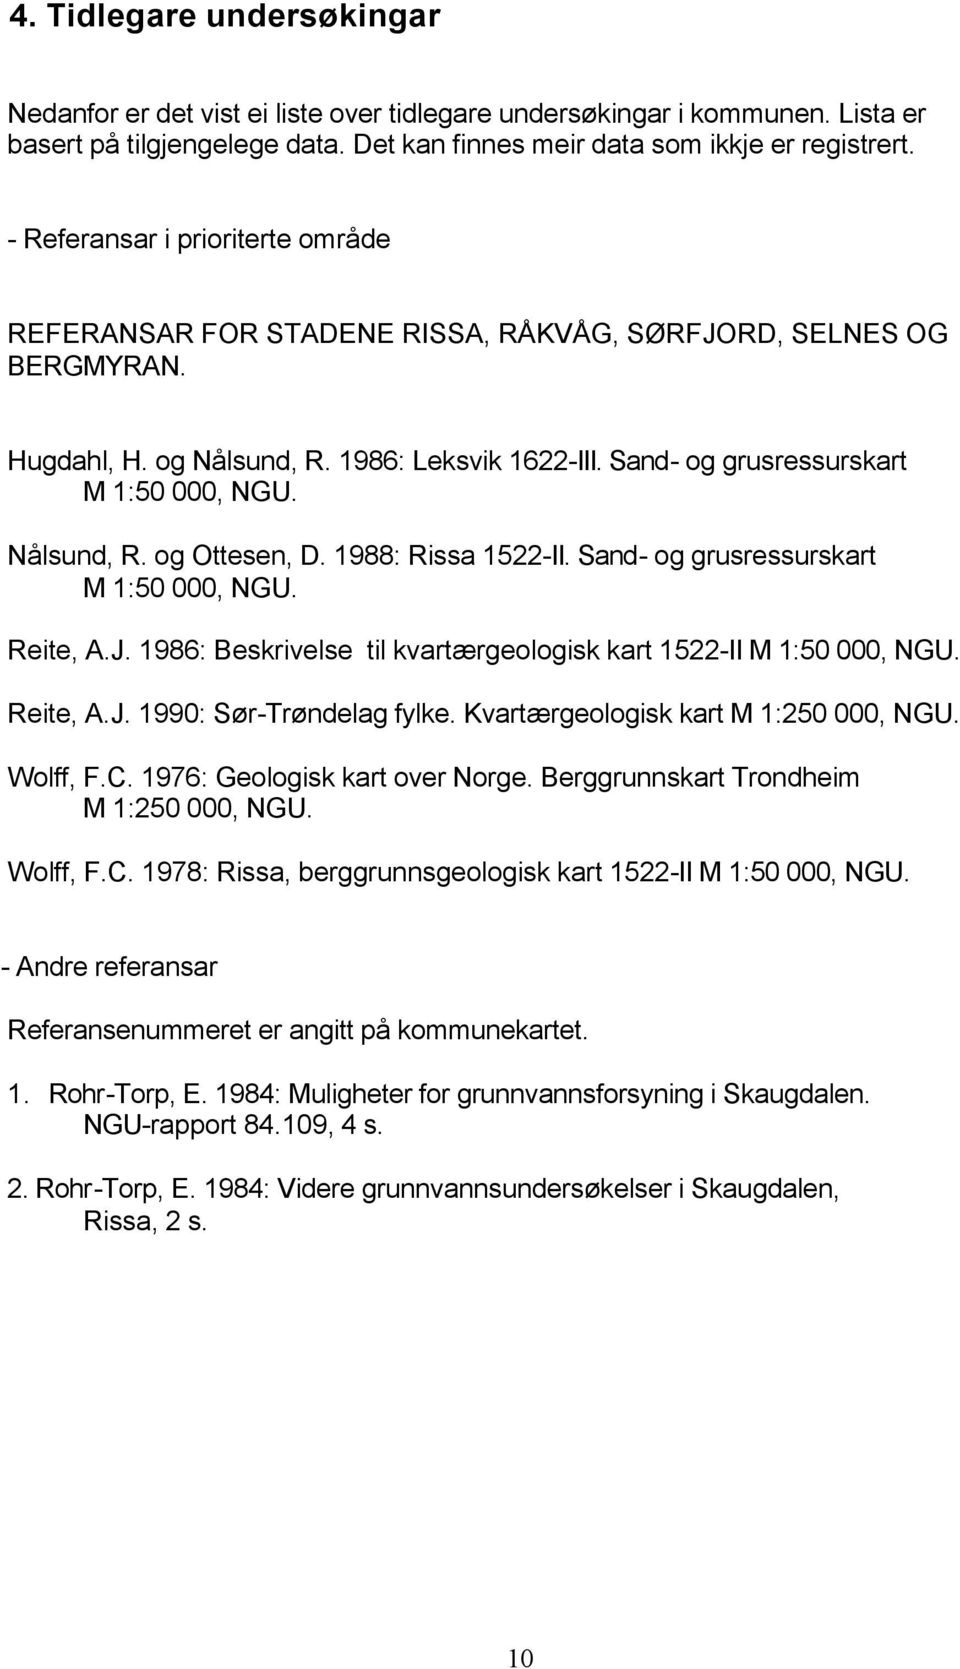 Nålsund, R. og Ottesen, D. 1988: Rissa 1522-II. Sand- og grusressurskart M 1:50 000, NGU. Reite, A.J. 1986: Beskrivelse til kvartærgeologisk kart 1522-II M 1:50 000, NGU. Reite, A.J. 1990: Sør-Trøndelag fylke.